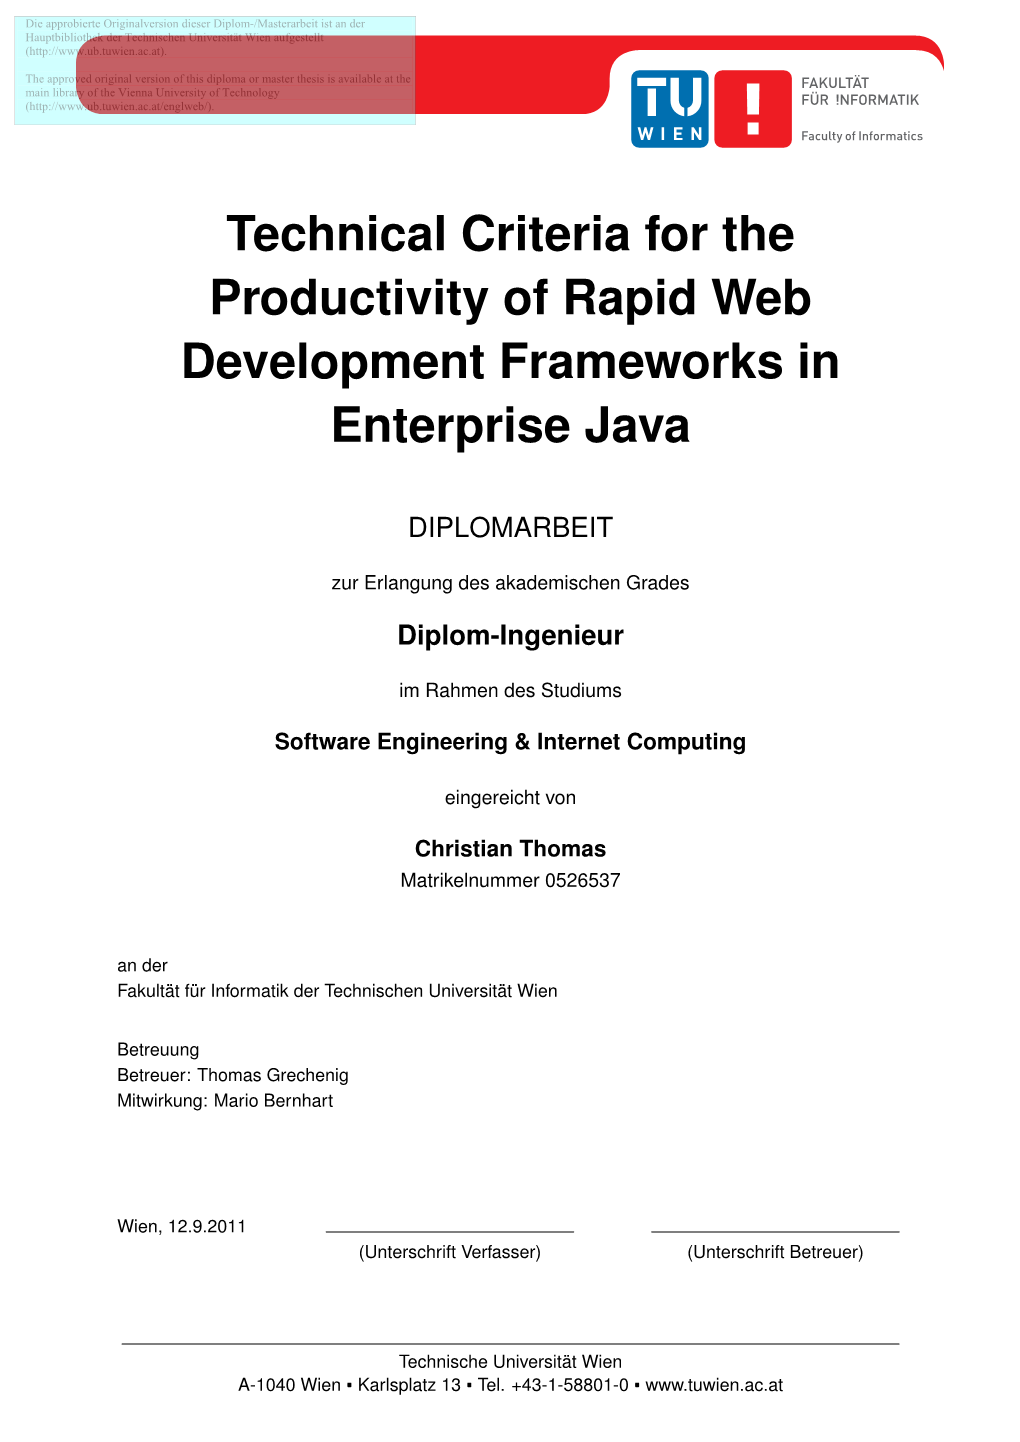 Technical Criteria for the Productivity of Rapid Web Development Frameworks in Enterprise Java